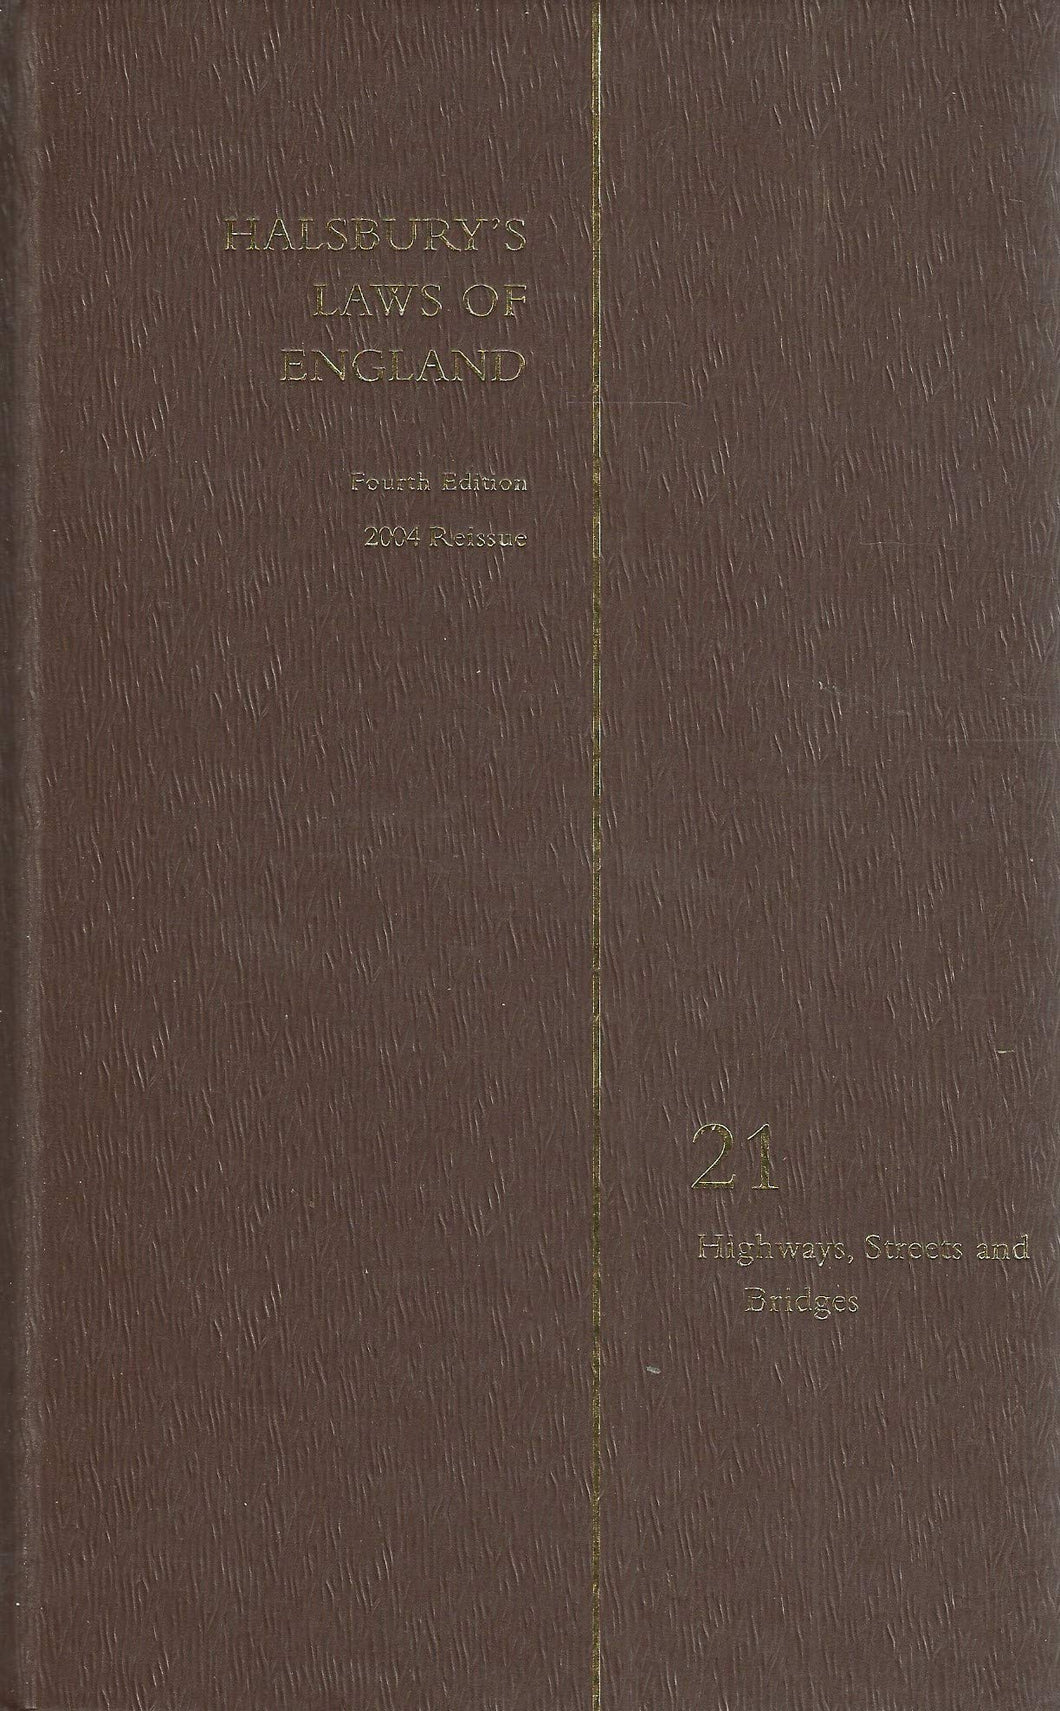 Halsbury's Laws of England Vol 21